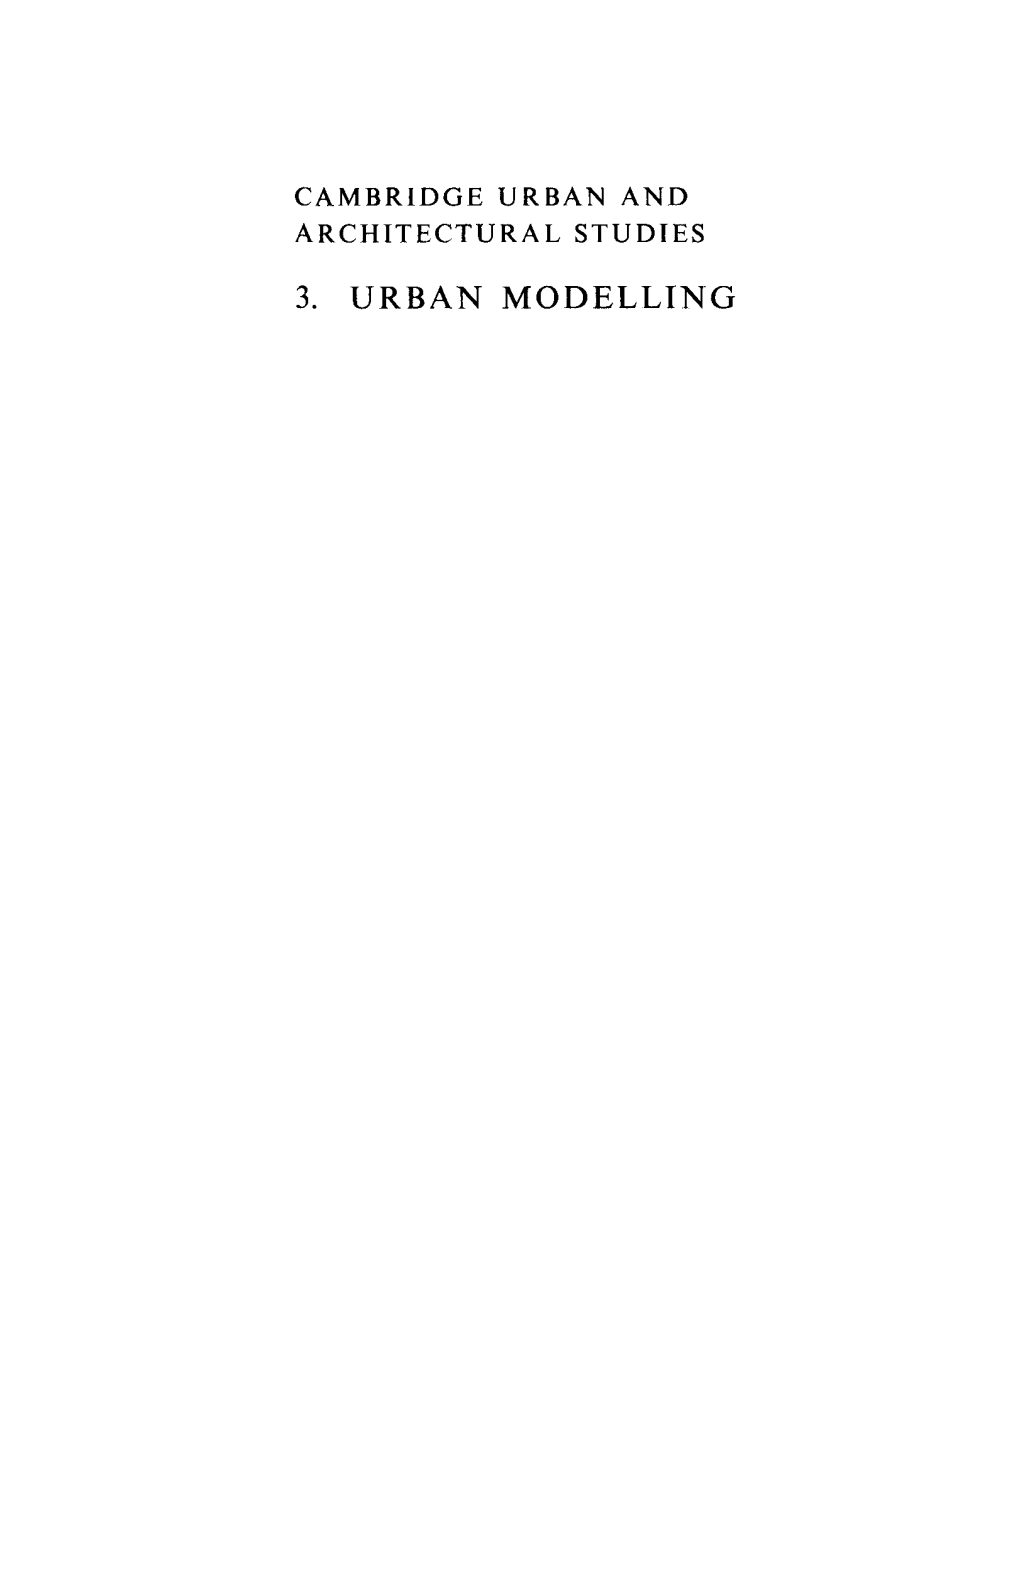 3. Urban Modelling Cambridge Urban and Architectural Studies